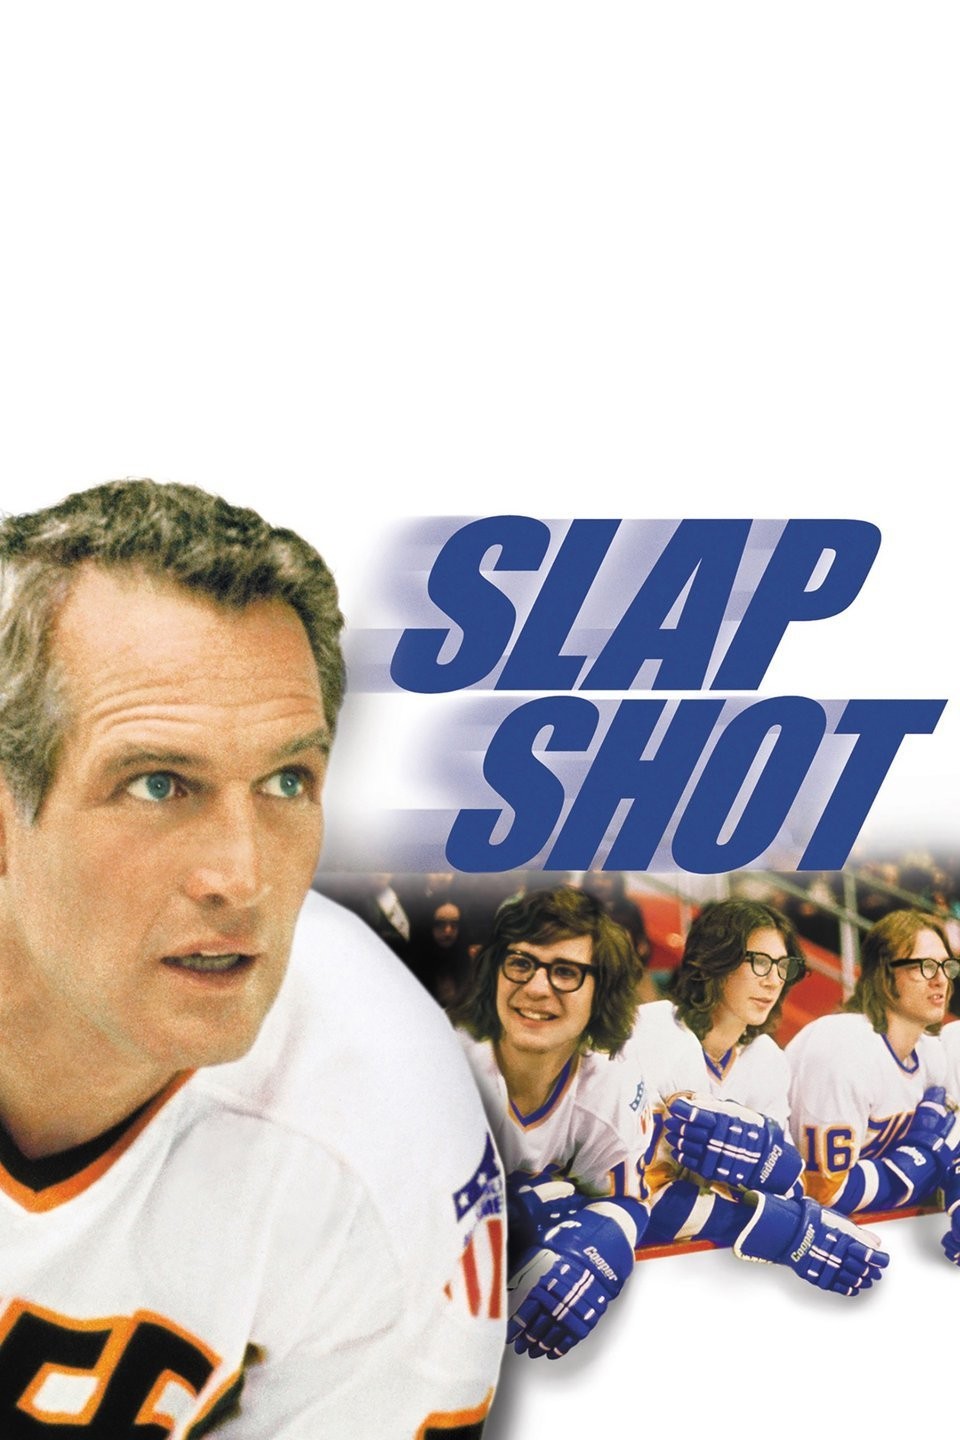 Slap Shot Cast Signed Blue Hockey Jersey w/ 'Old Time Hockey